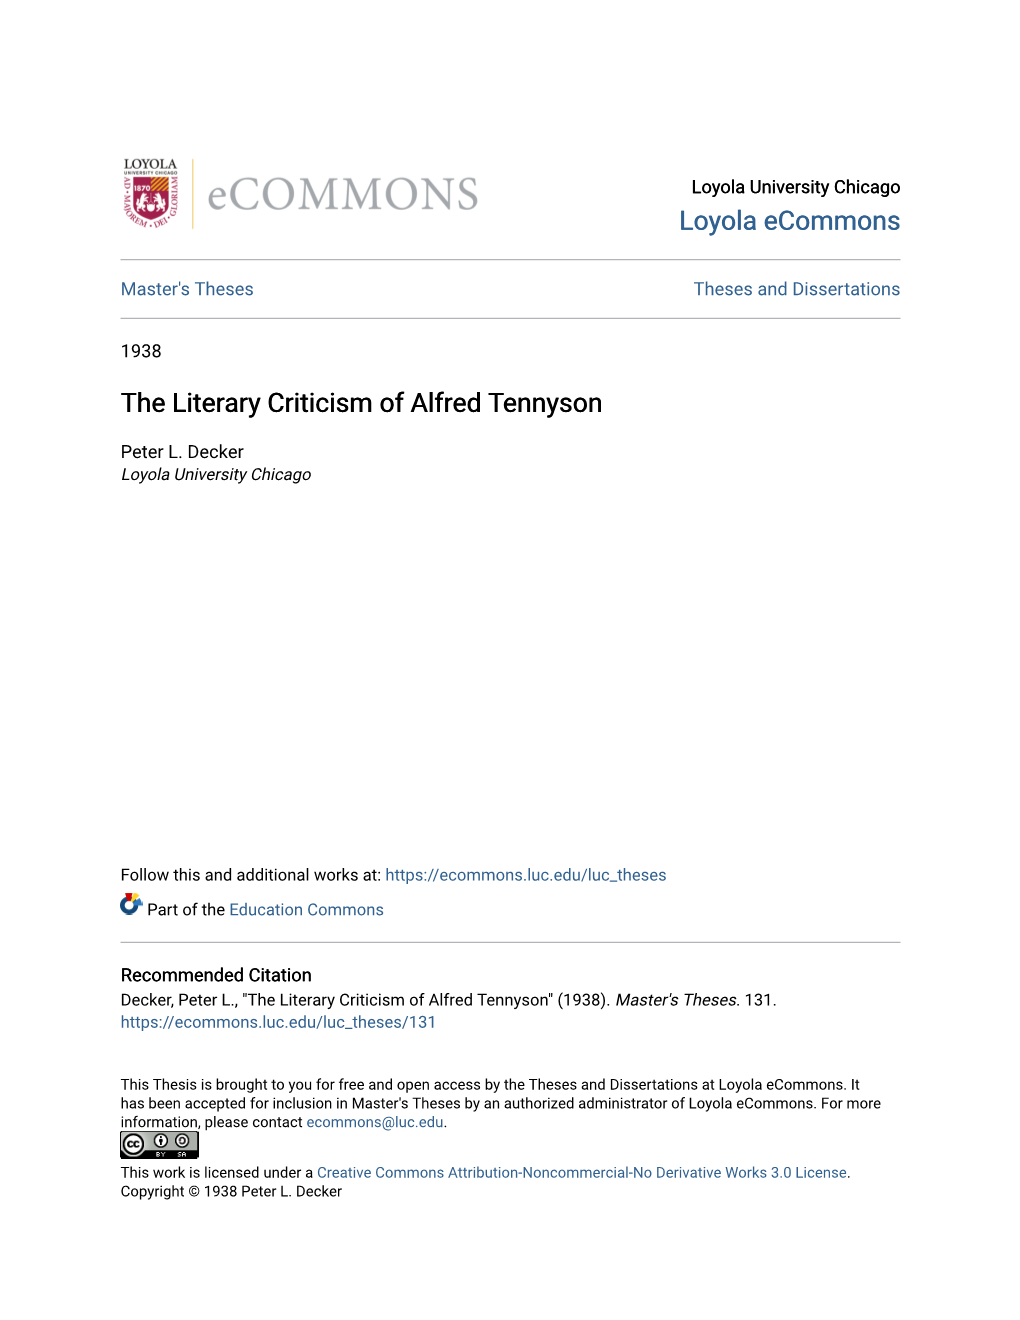 The Literary Criticism of Alfred Tennyson